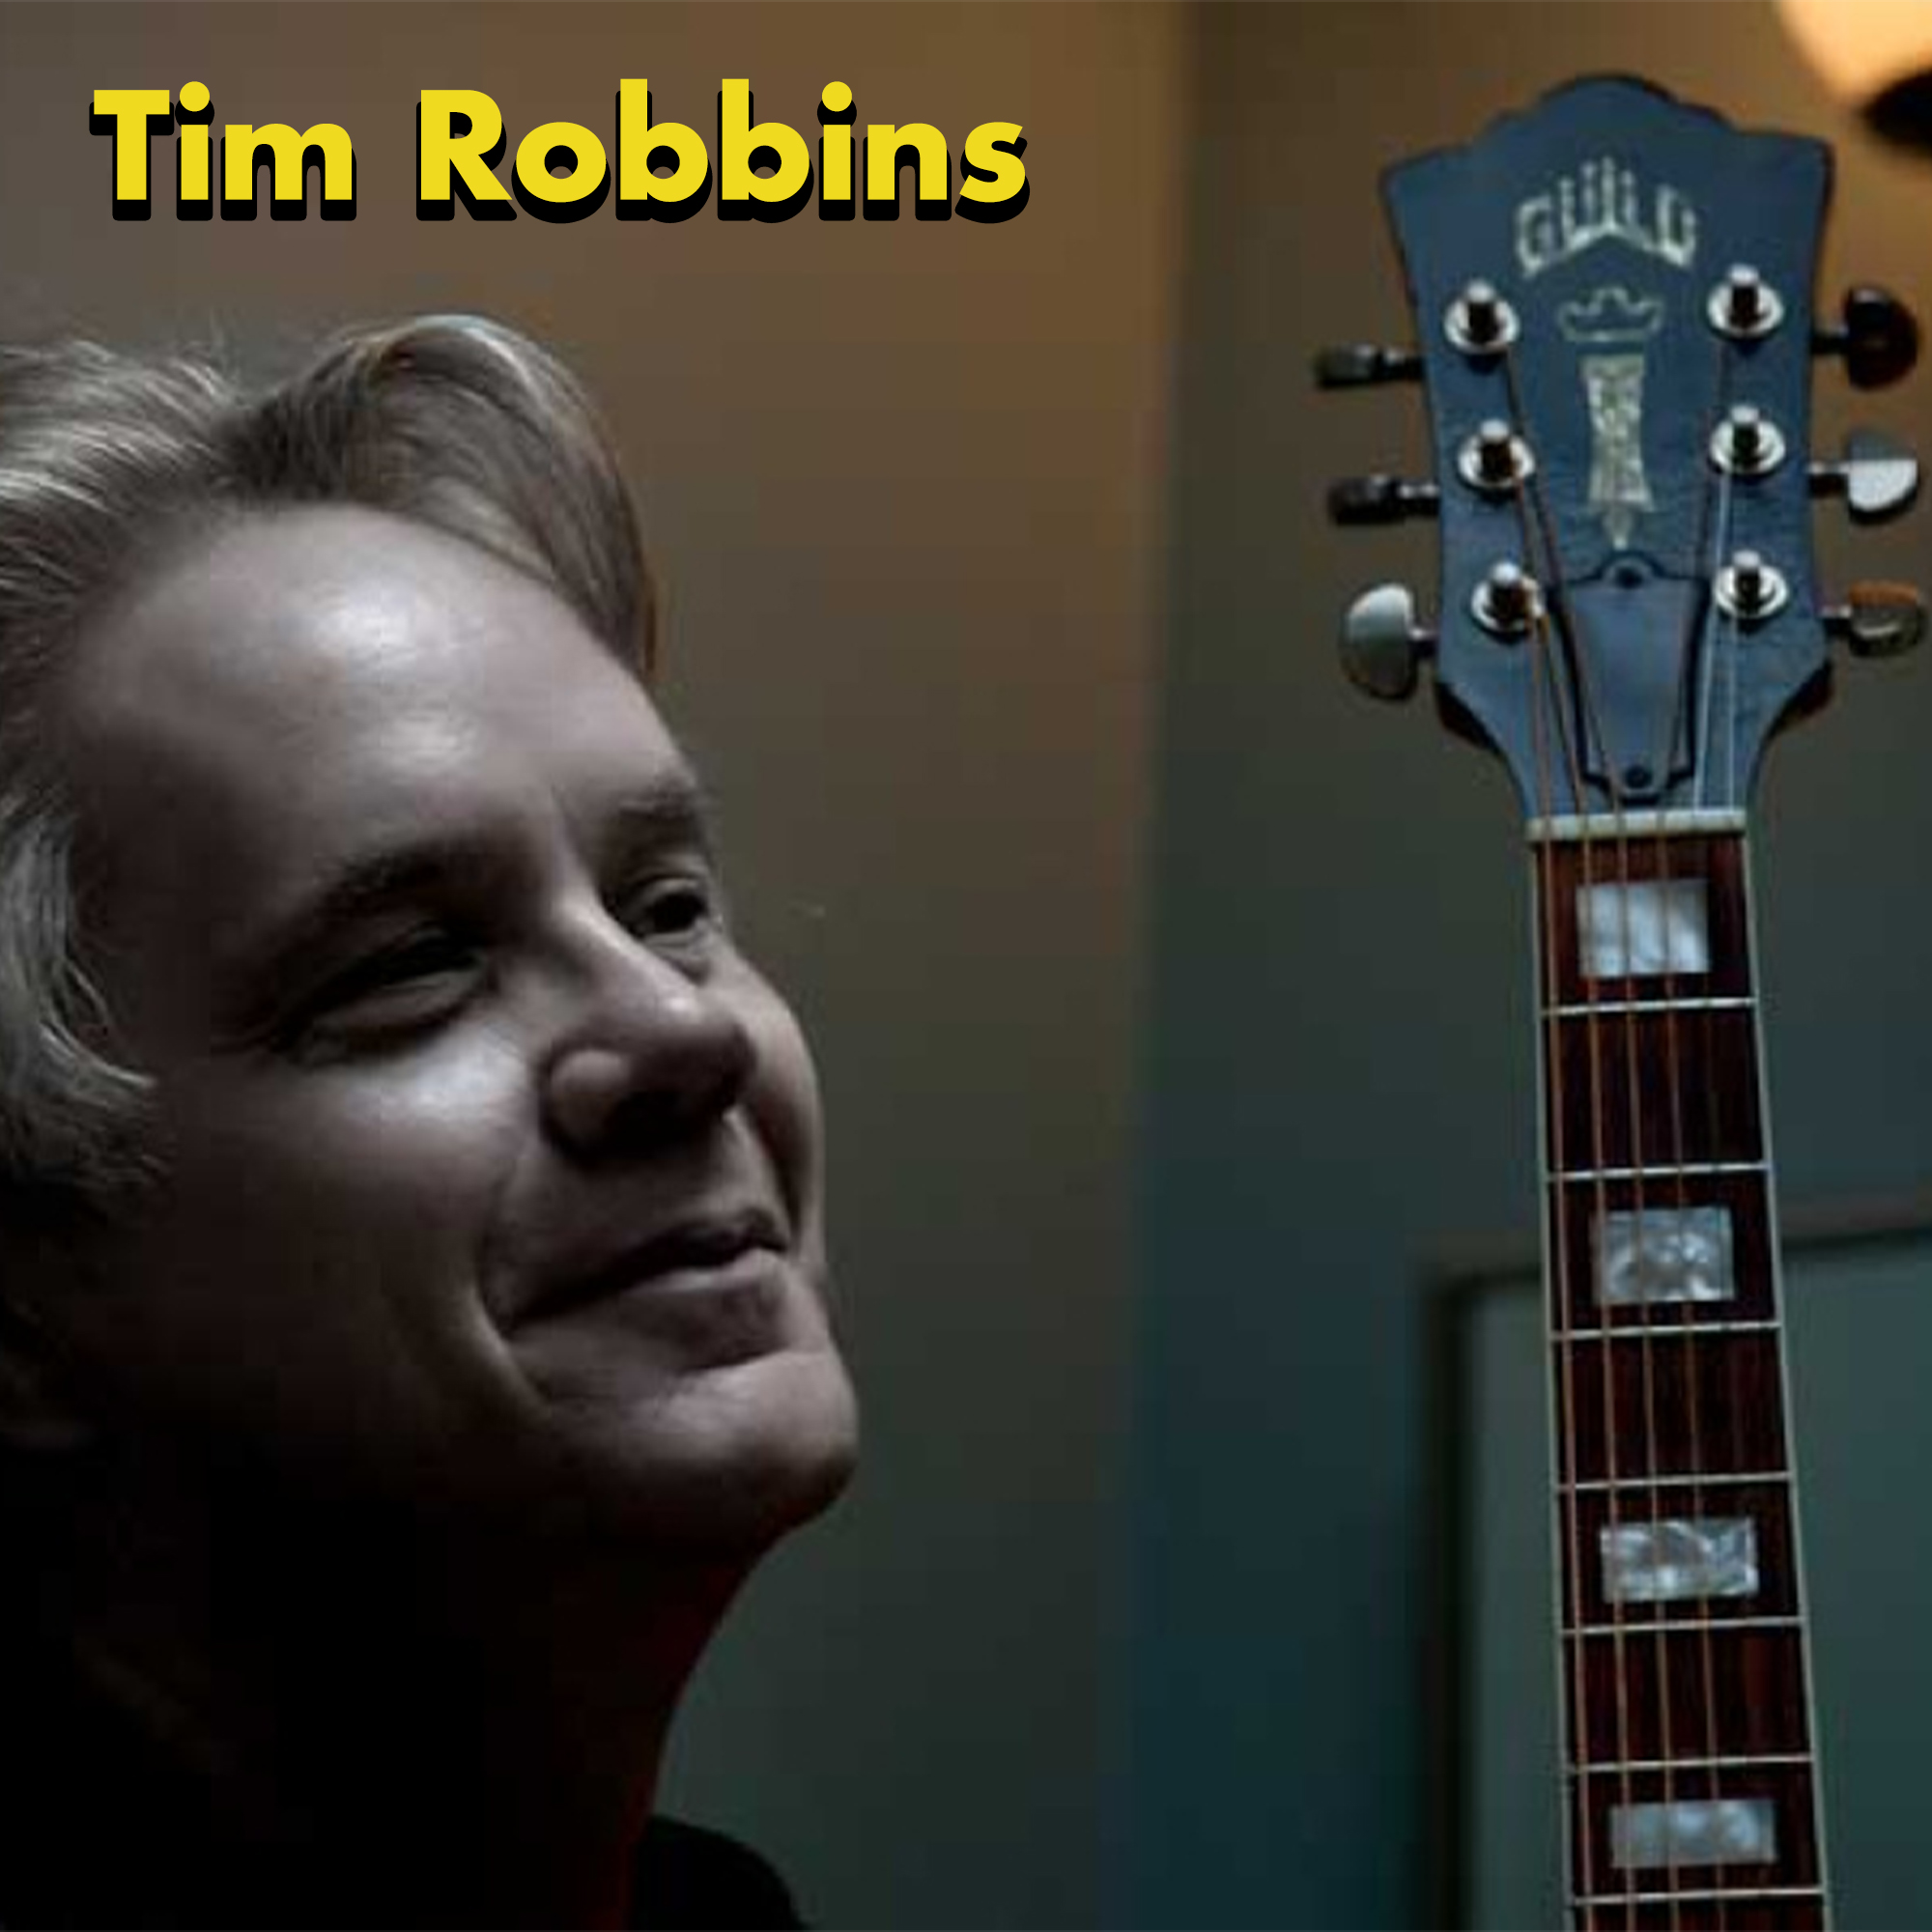 actors in bands - string instrument - Tim Robbins